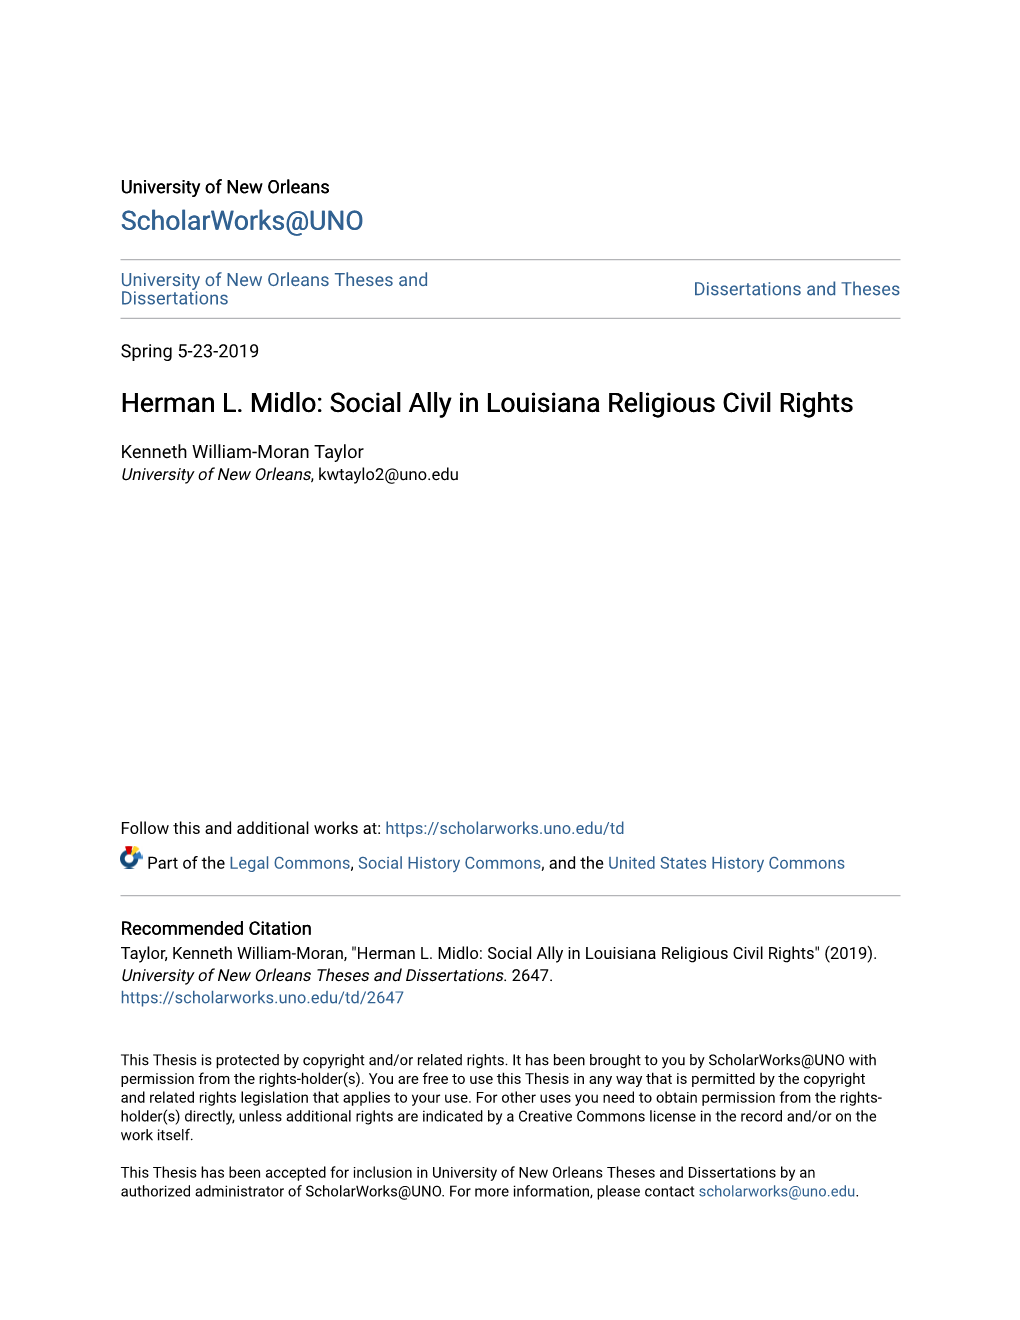 Herman L. Midlo: Social Ally in Louisiana Religious Civil Rights